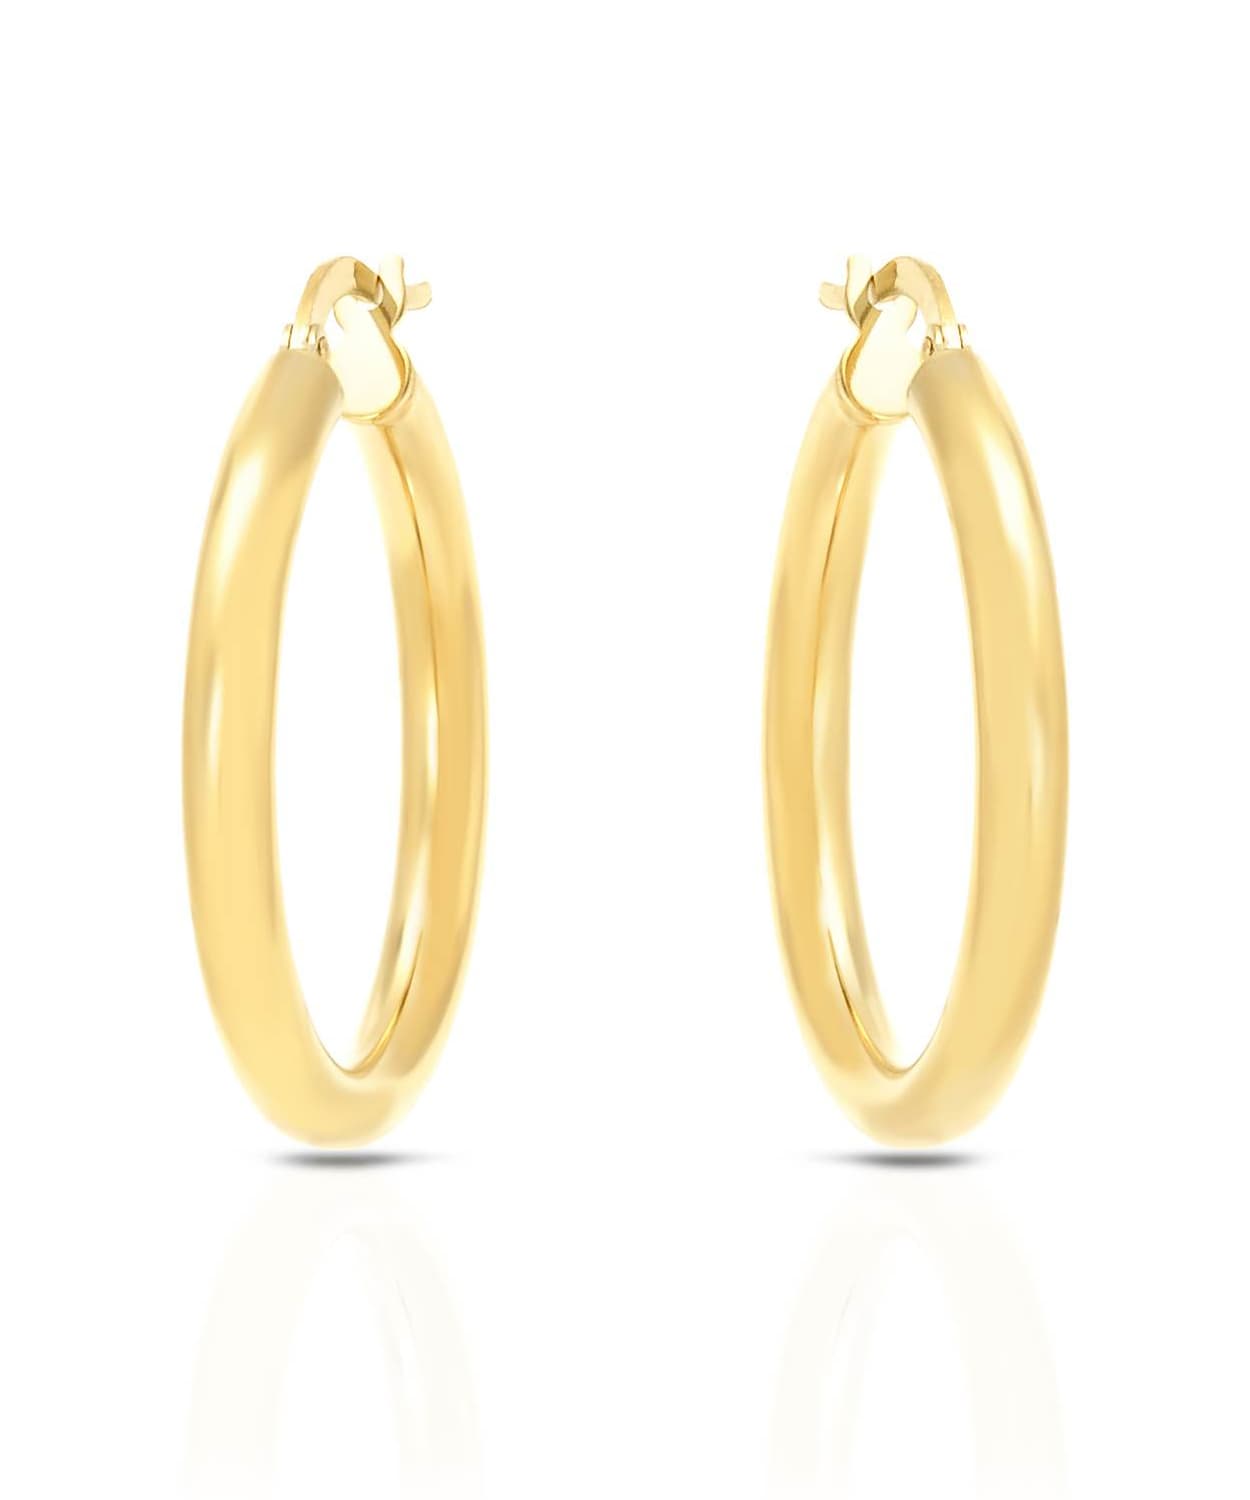 Esemco 14k Yellow Gold Classic Hoop Earrings View 1